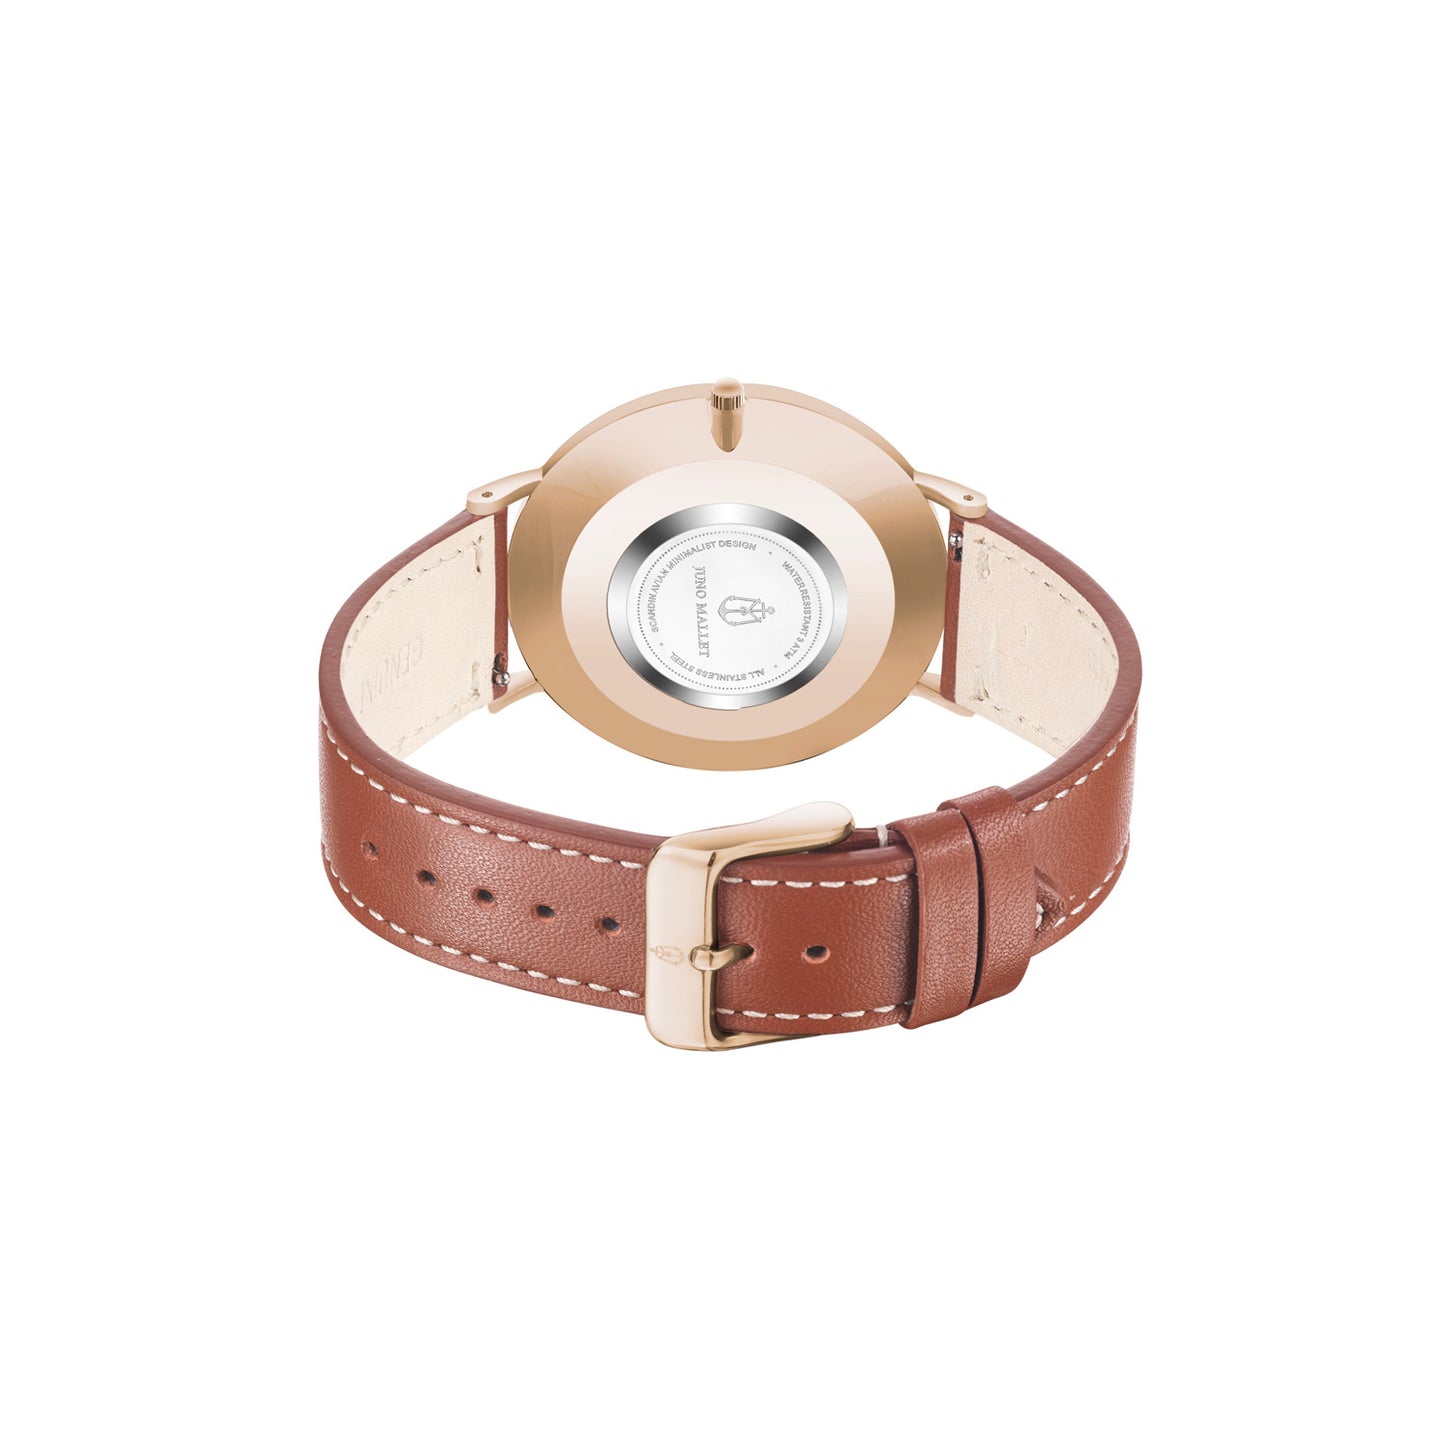 Classic Vito / Bracelet Watch / Cream White / Light Brown / Rose Gold / 40mm